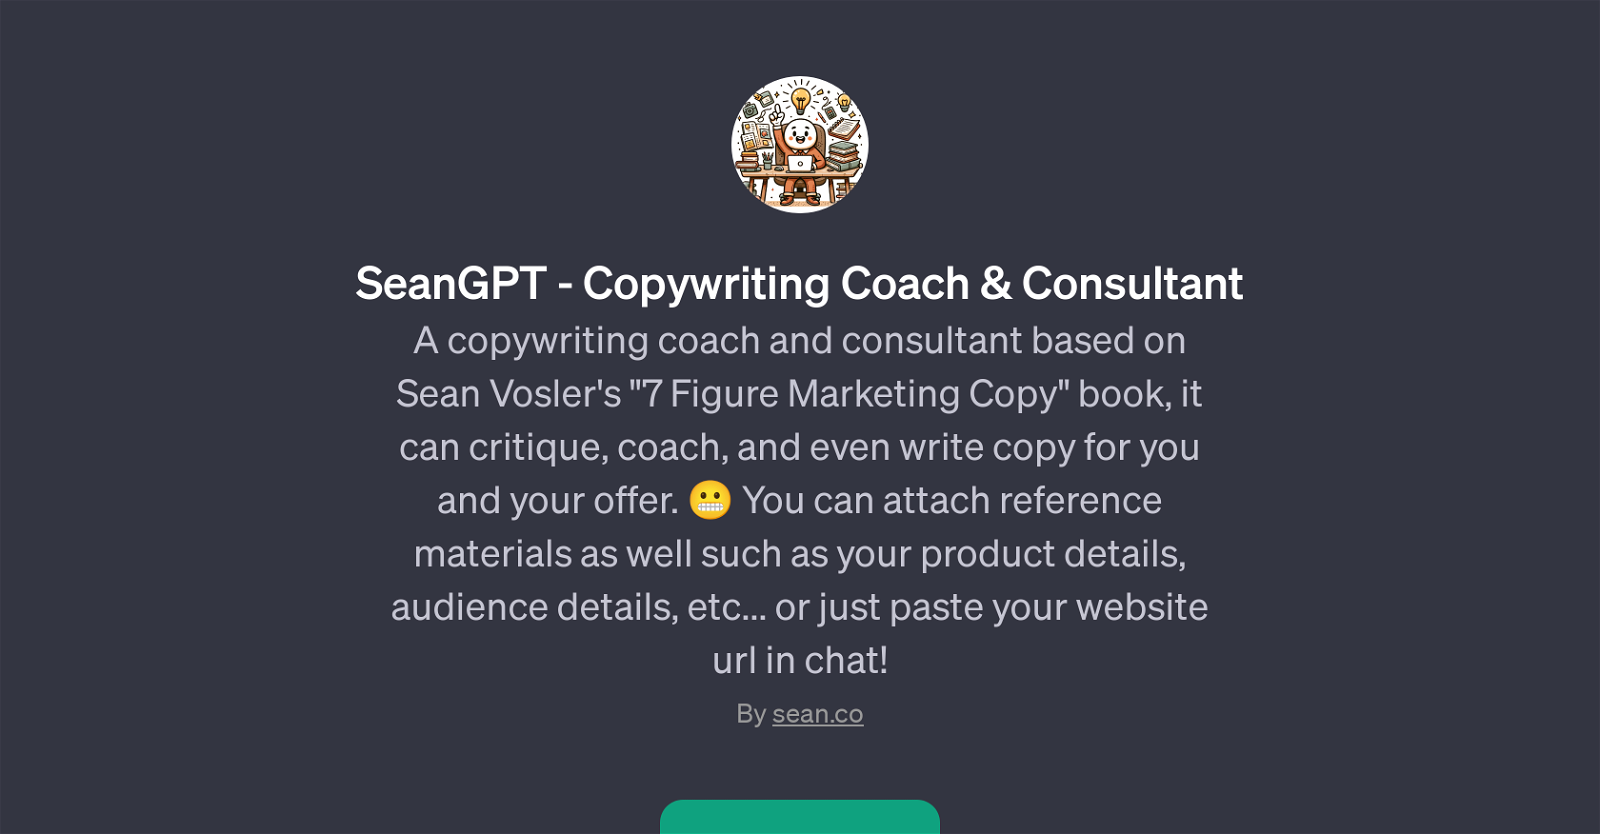 SeanGPT - Copywriting Coach & Consultant website